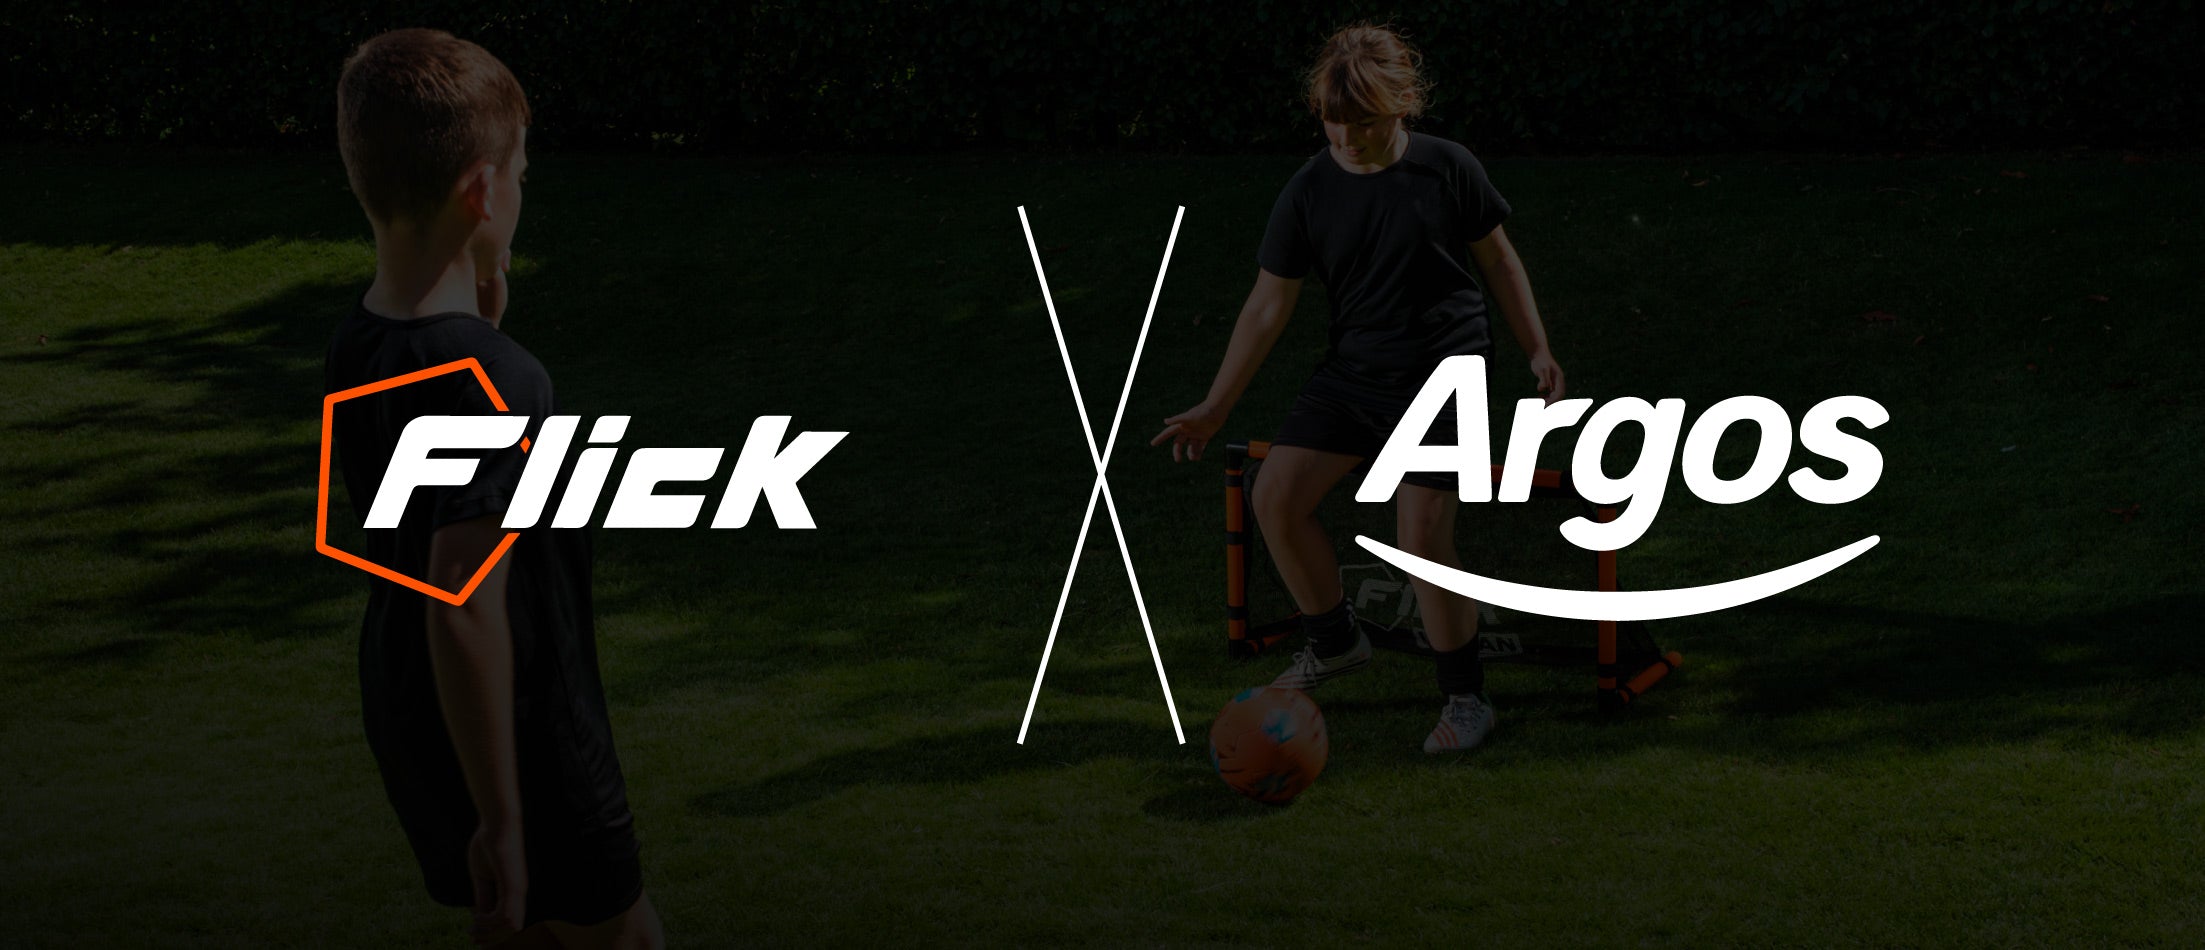 Flick Extend Retail Partnership with Argos